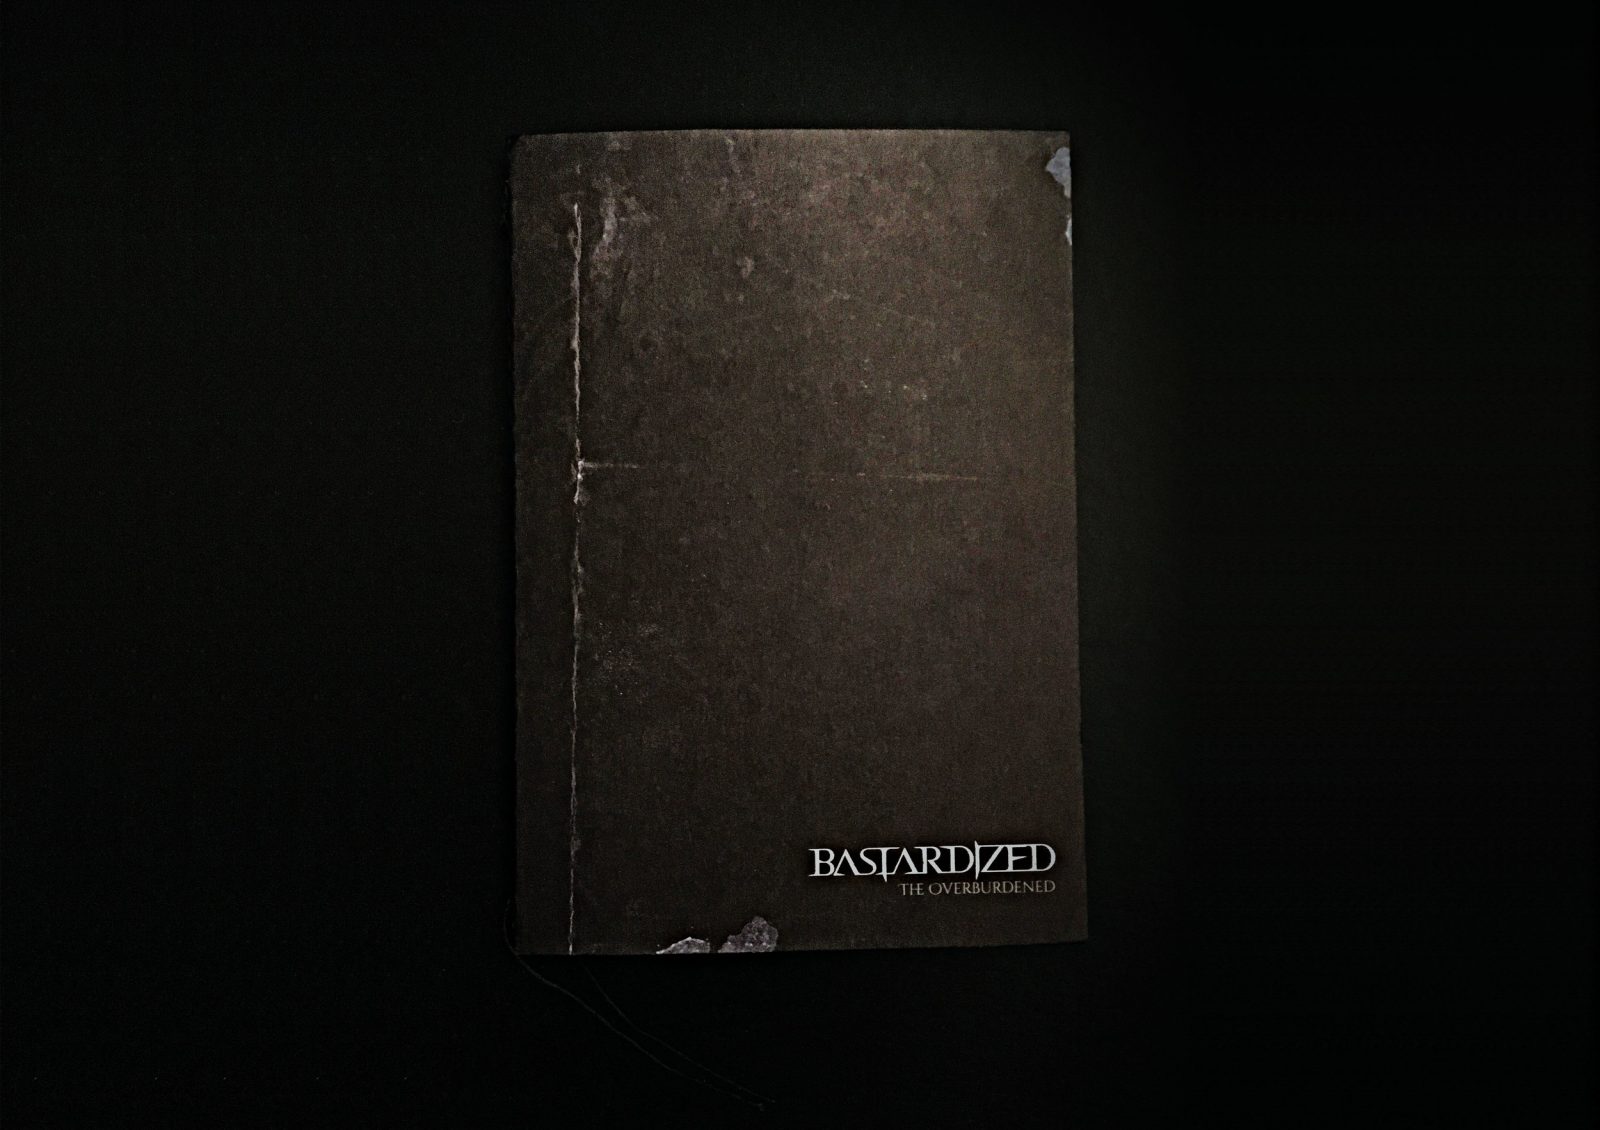 Bastardized ‘The Overburdened’ Branding and Packaging Design